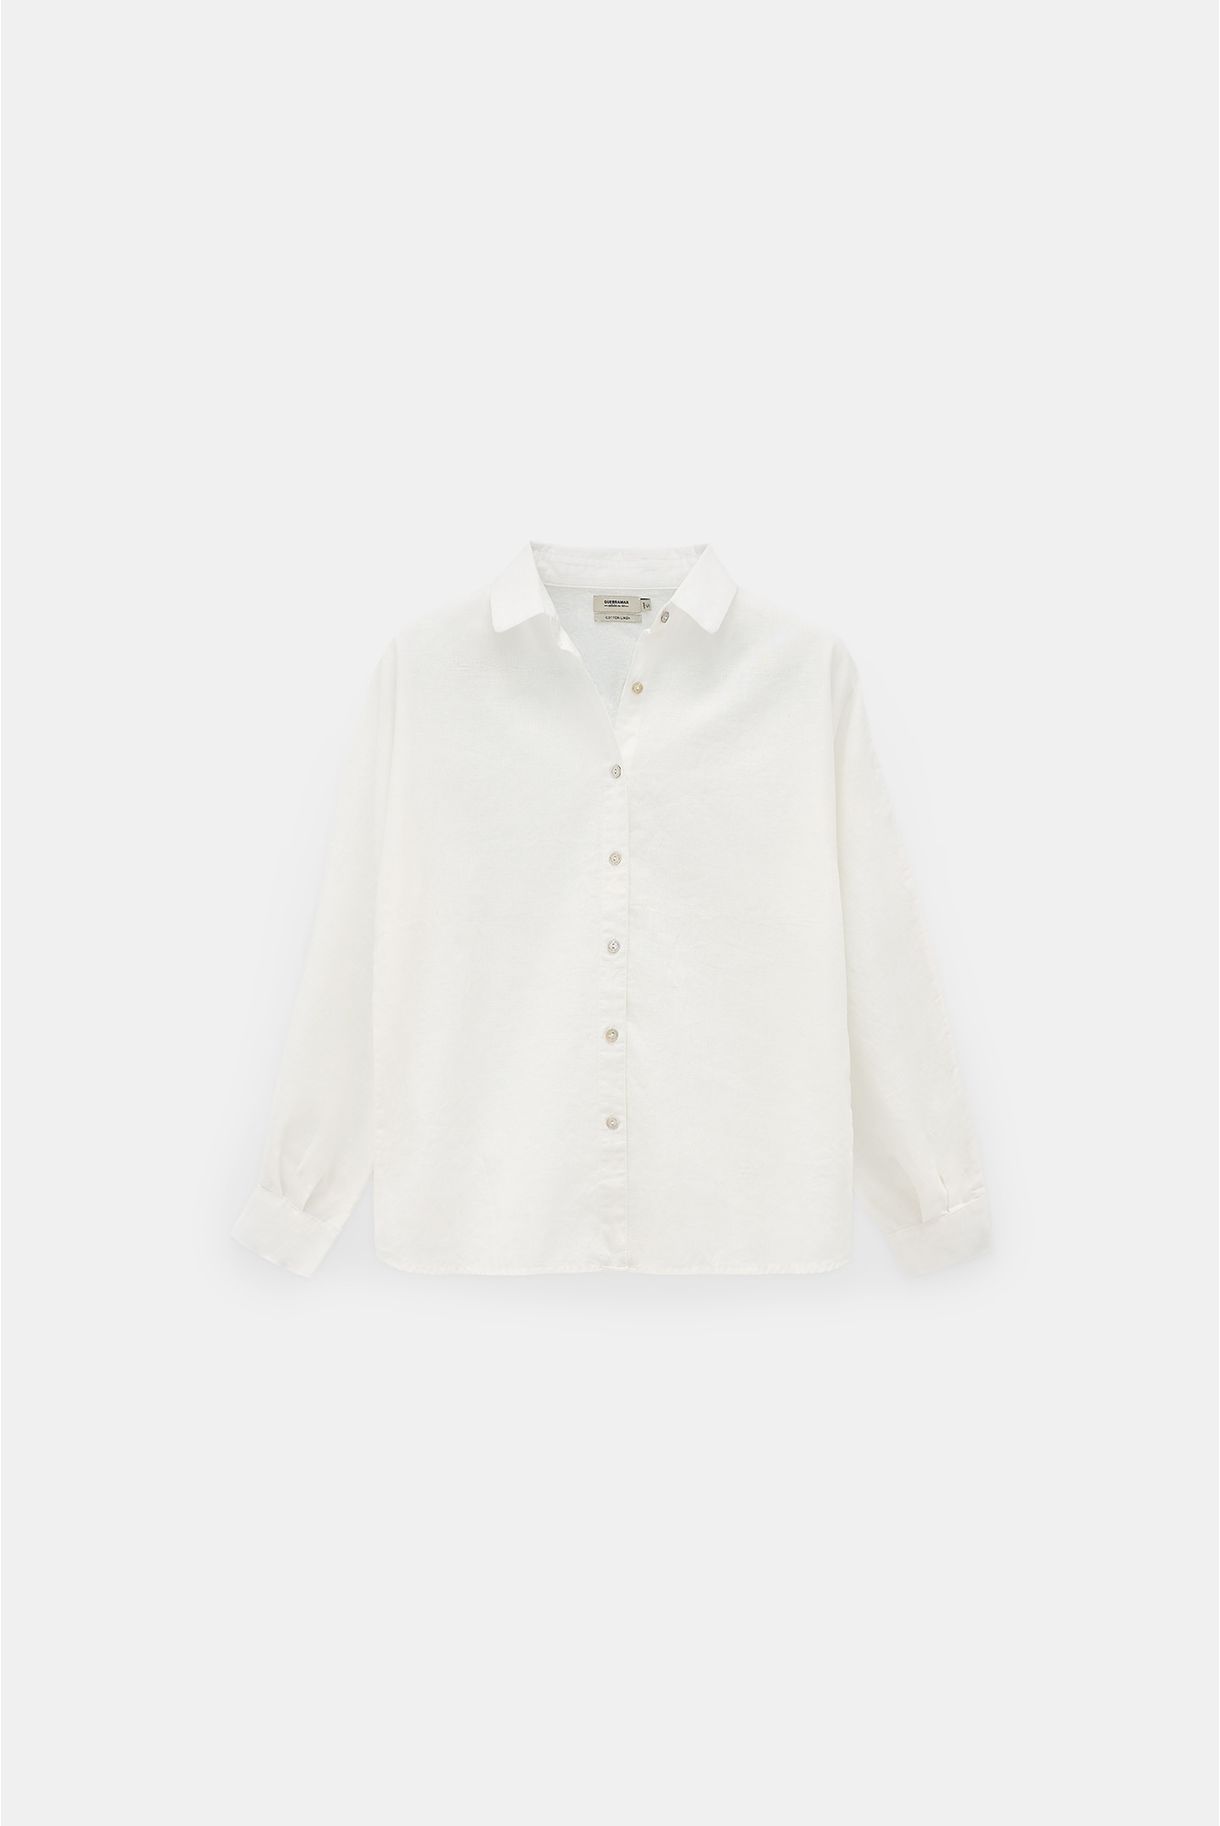 cotton and linen shirt